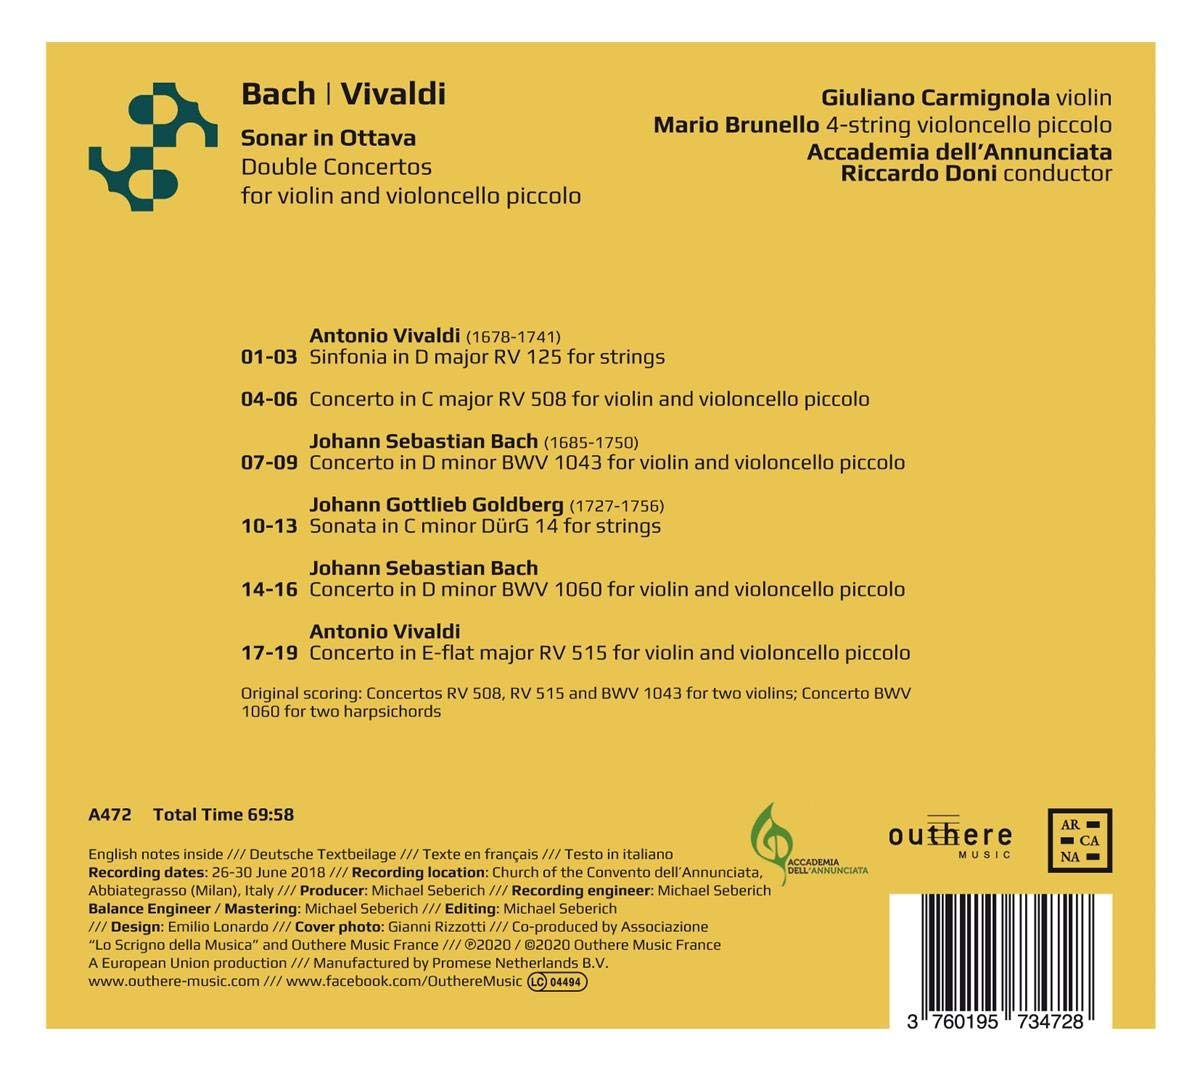 Giuliano Carmignola / Mario Brunello 바흐 / 비발디: 2대의 바이올린을 위한 협주곡 [바이올린과 피콜로 첼로 편곡반]